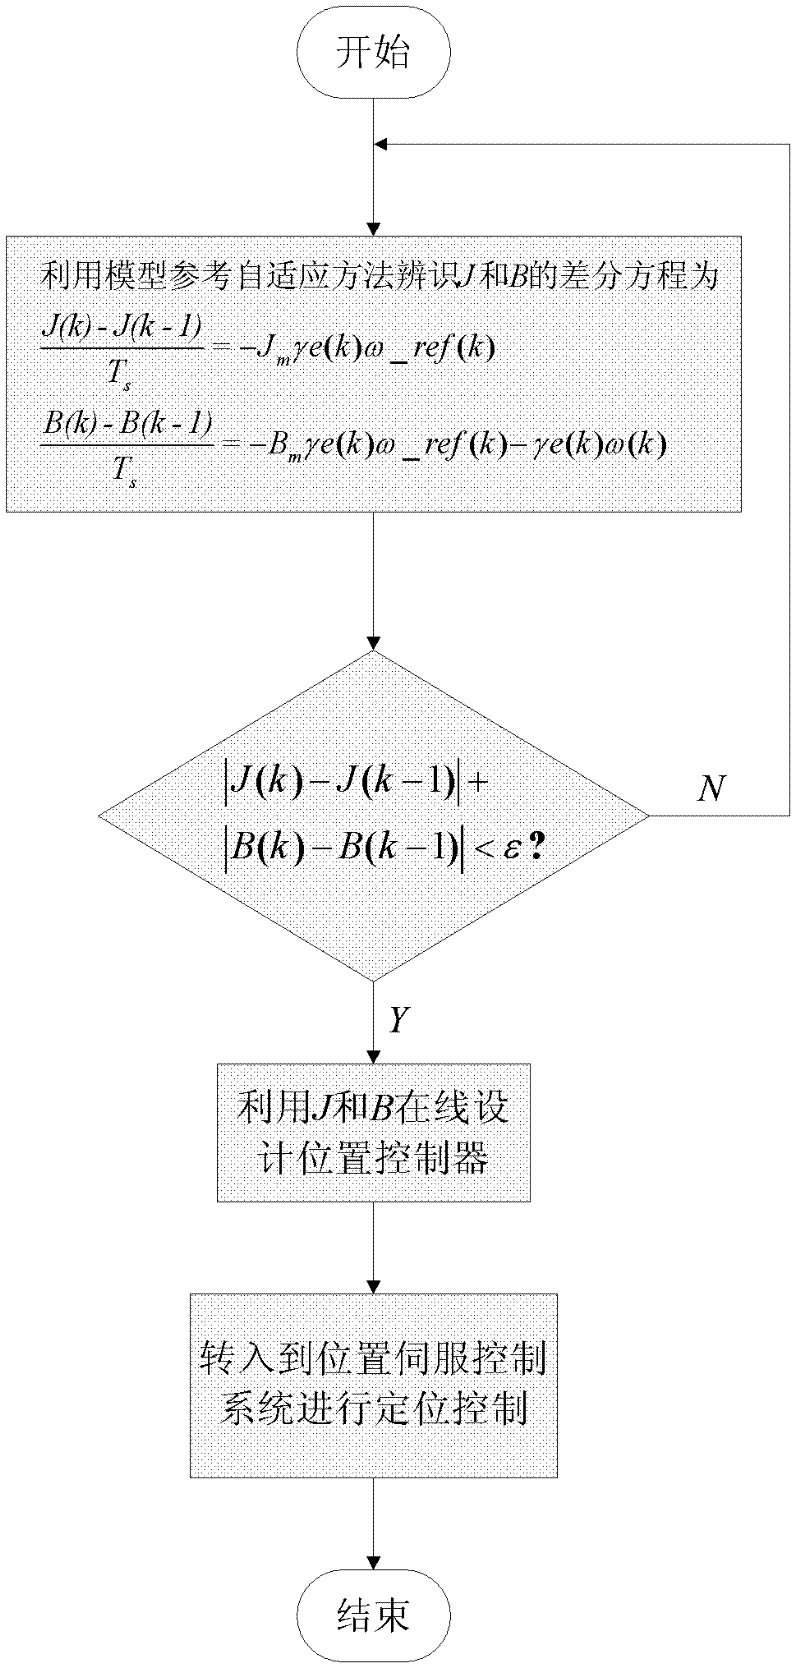 On-line identification and control method for parameter of alternating current position servo system model